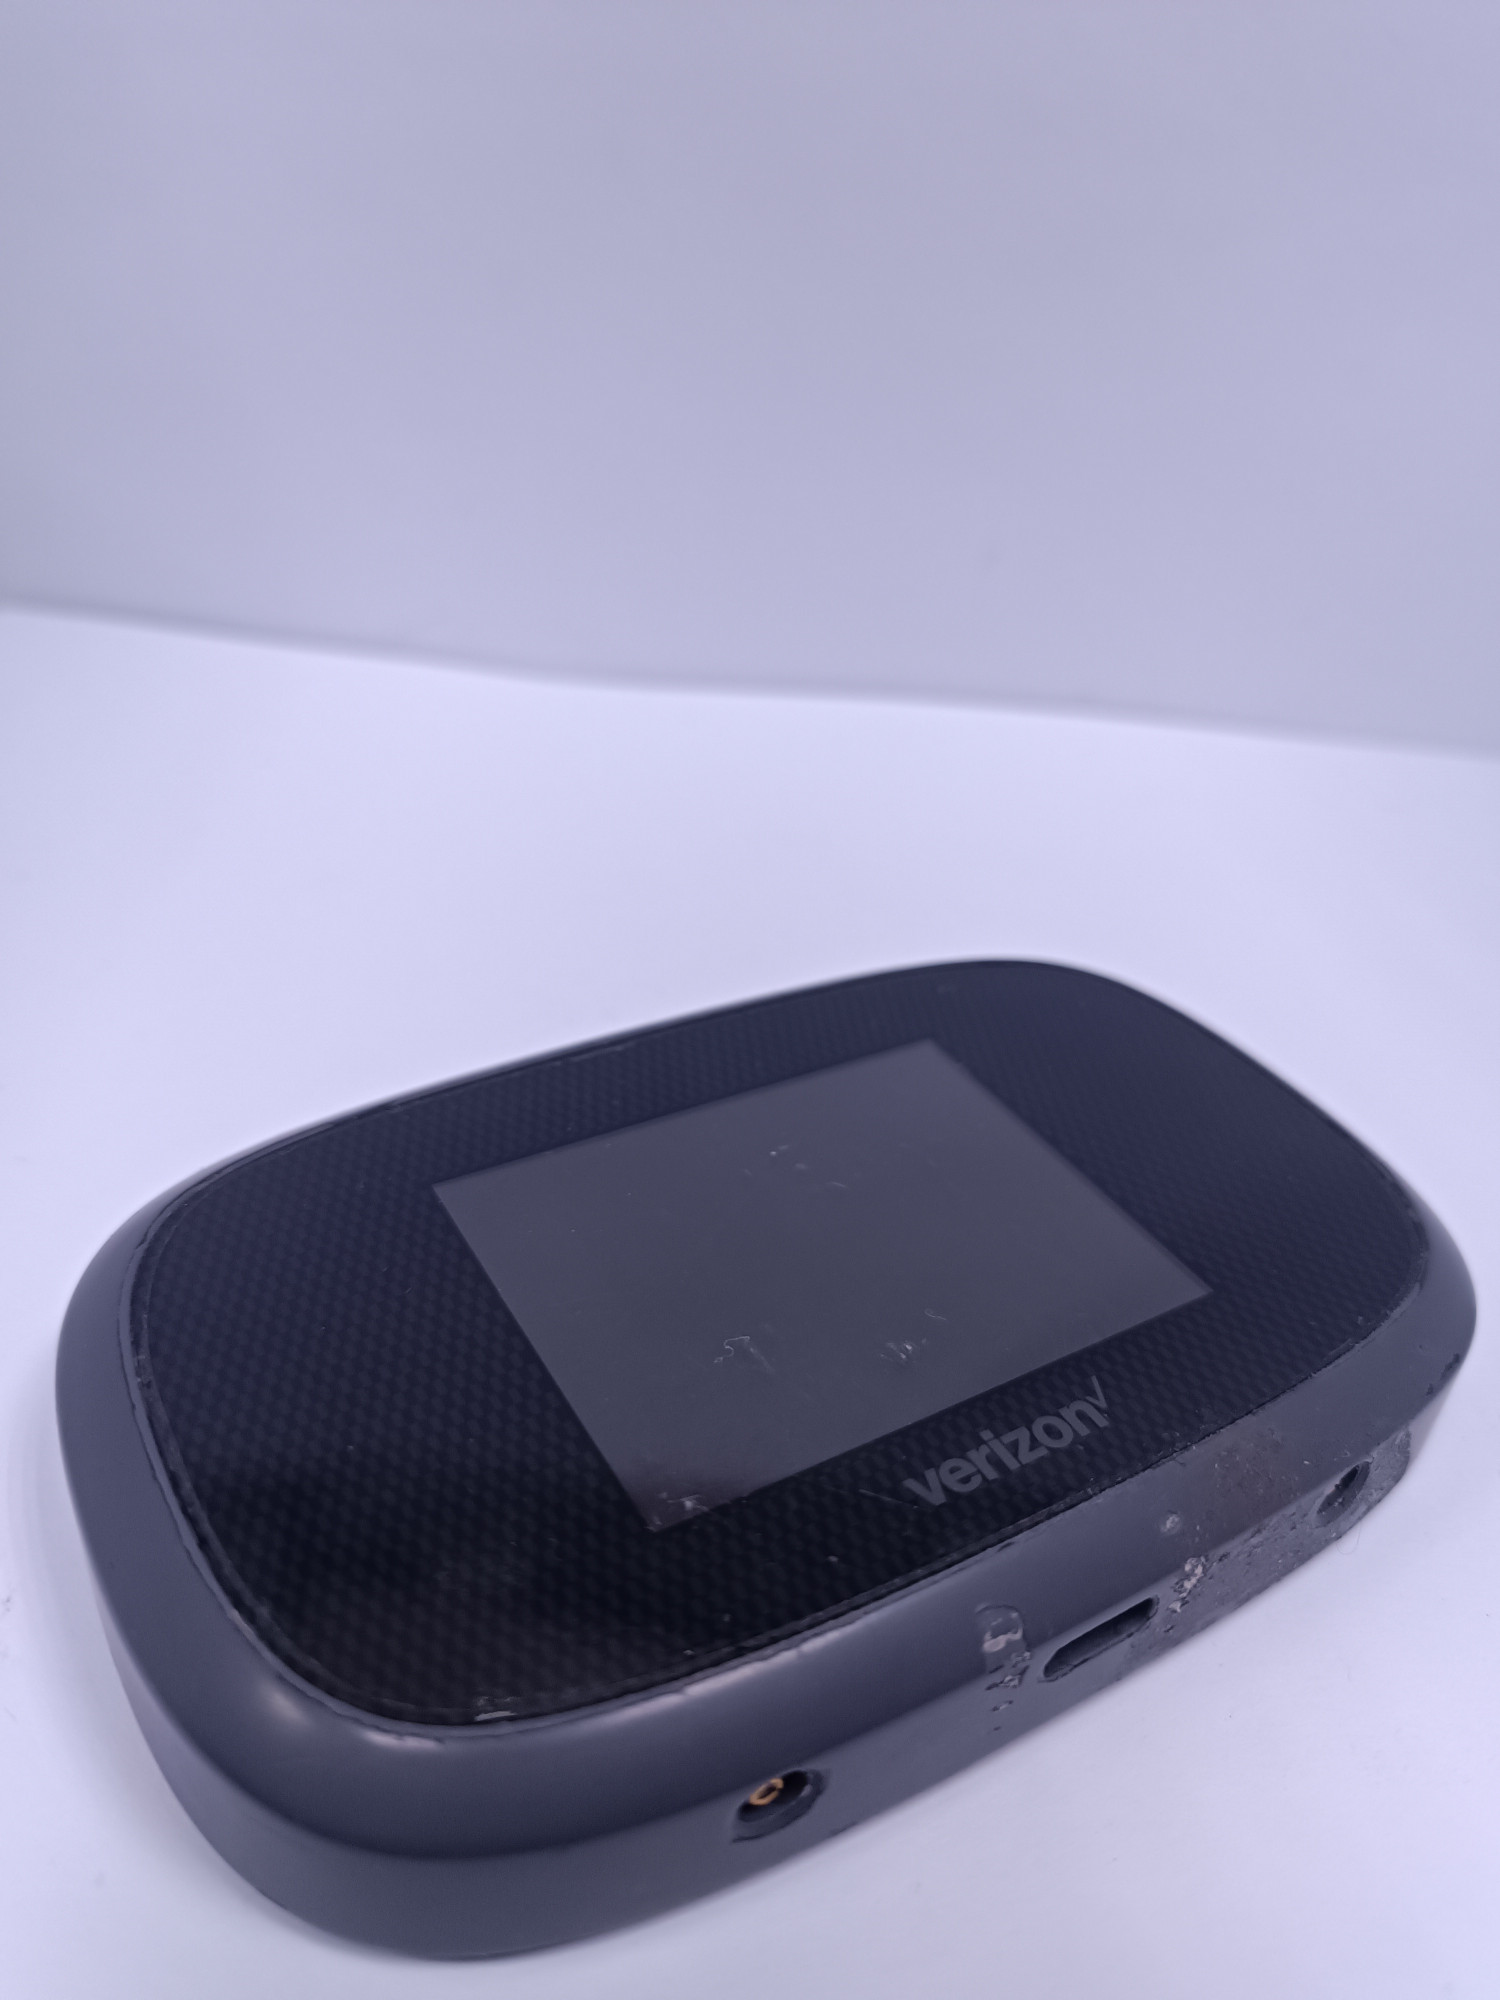 Модем 4G/3G + Wi-Fi роутер Novatel Wireless Jetpack MiFi 8800L 0